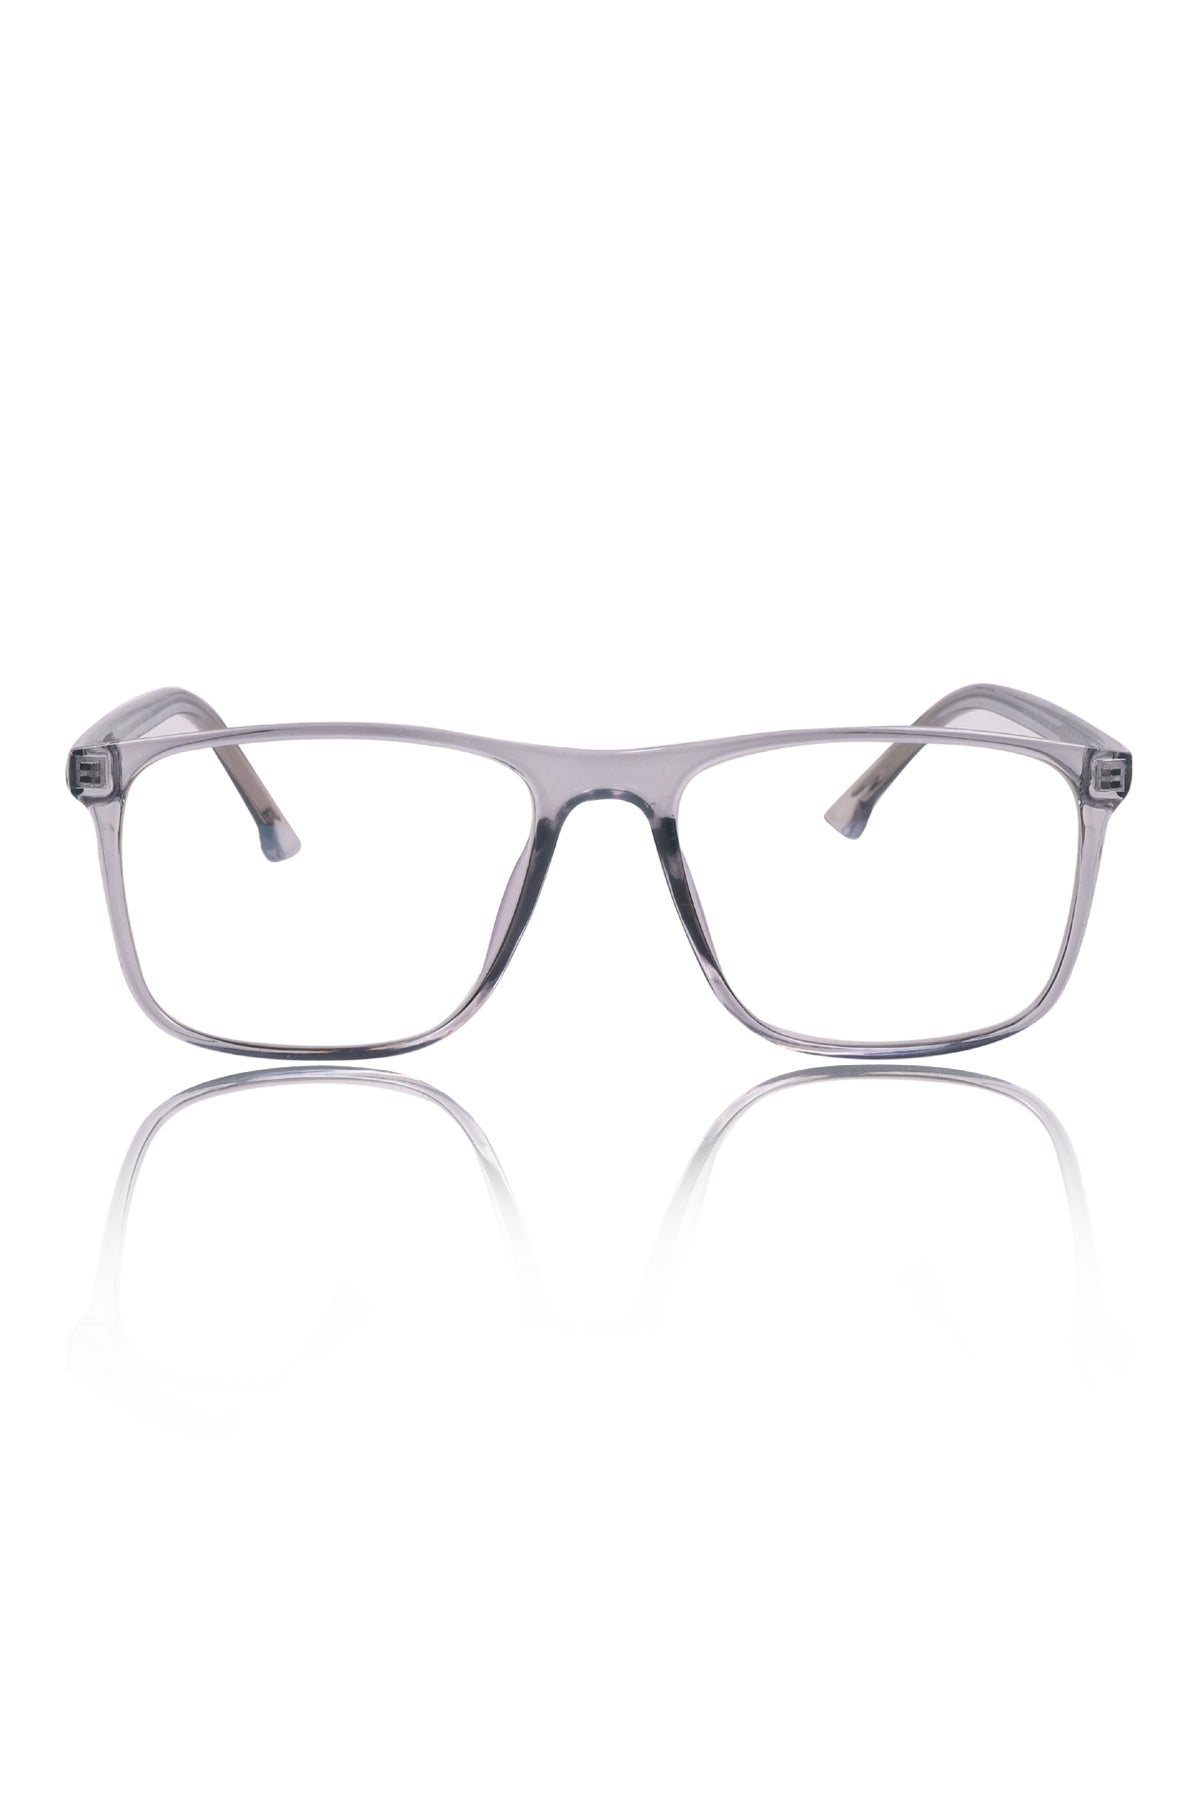 Jodykoes® Premium Series Pure Acetate Sheet Rectangle Eyewear Frame | Modern Fashionable Trending Spectacle Eyeglasses For Men and Women (Ash Grey) - Jodykoes ®